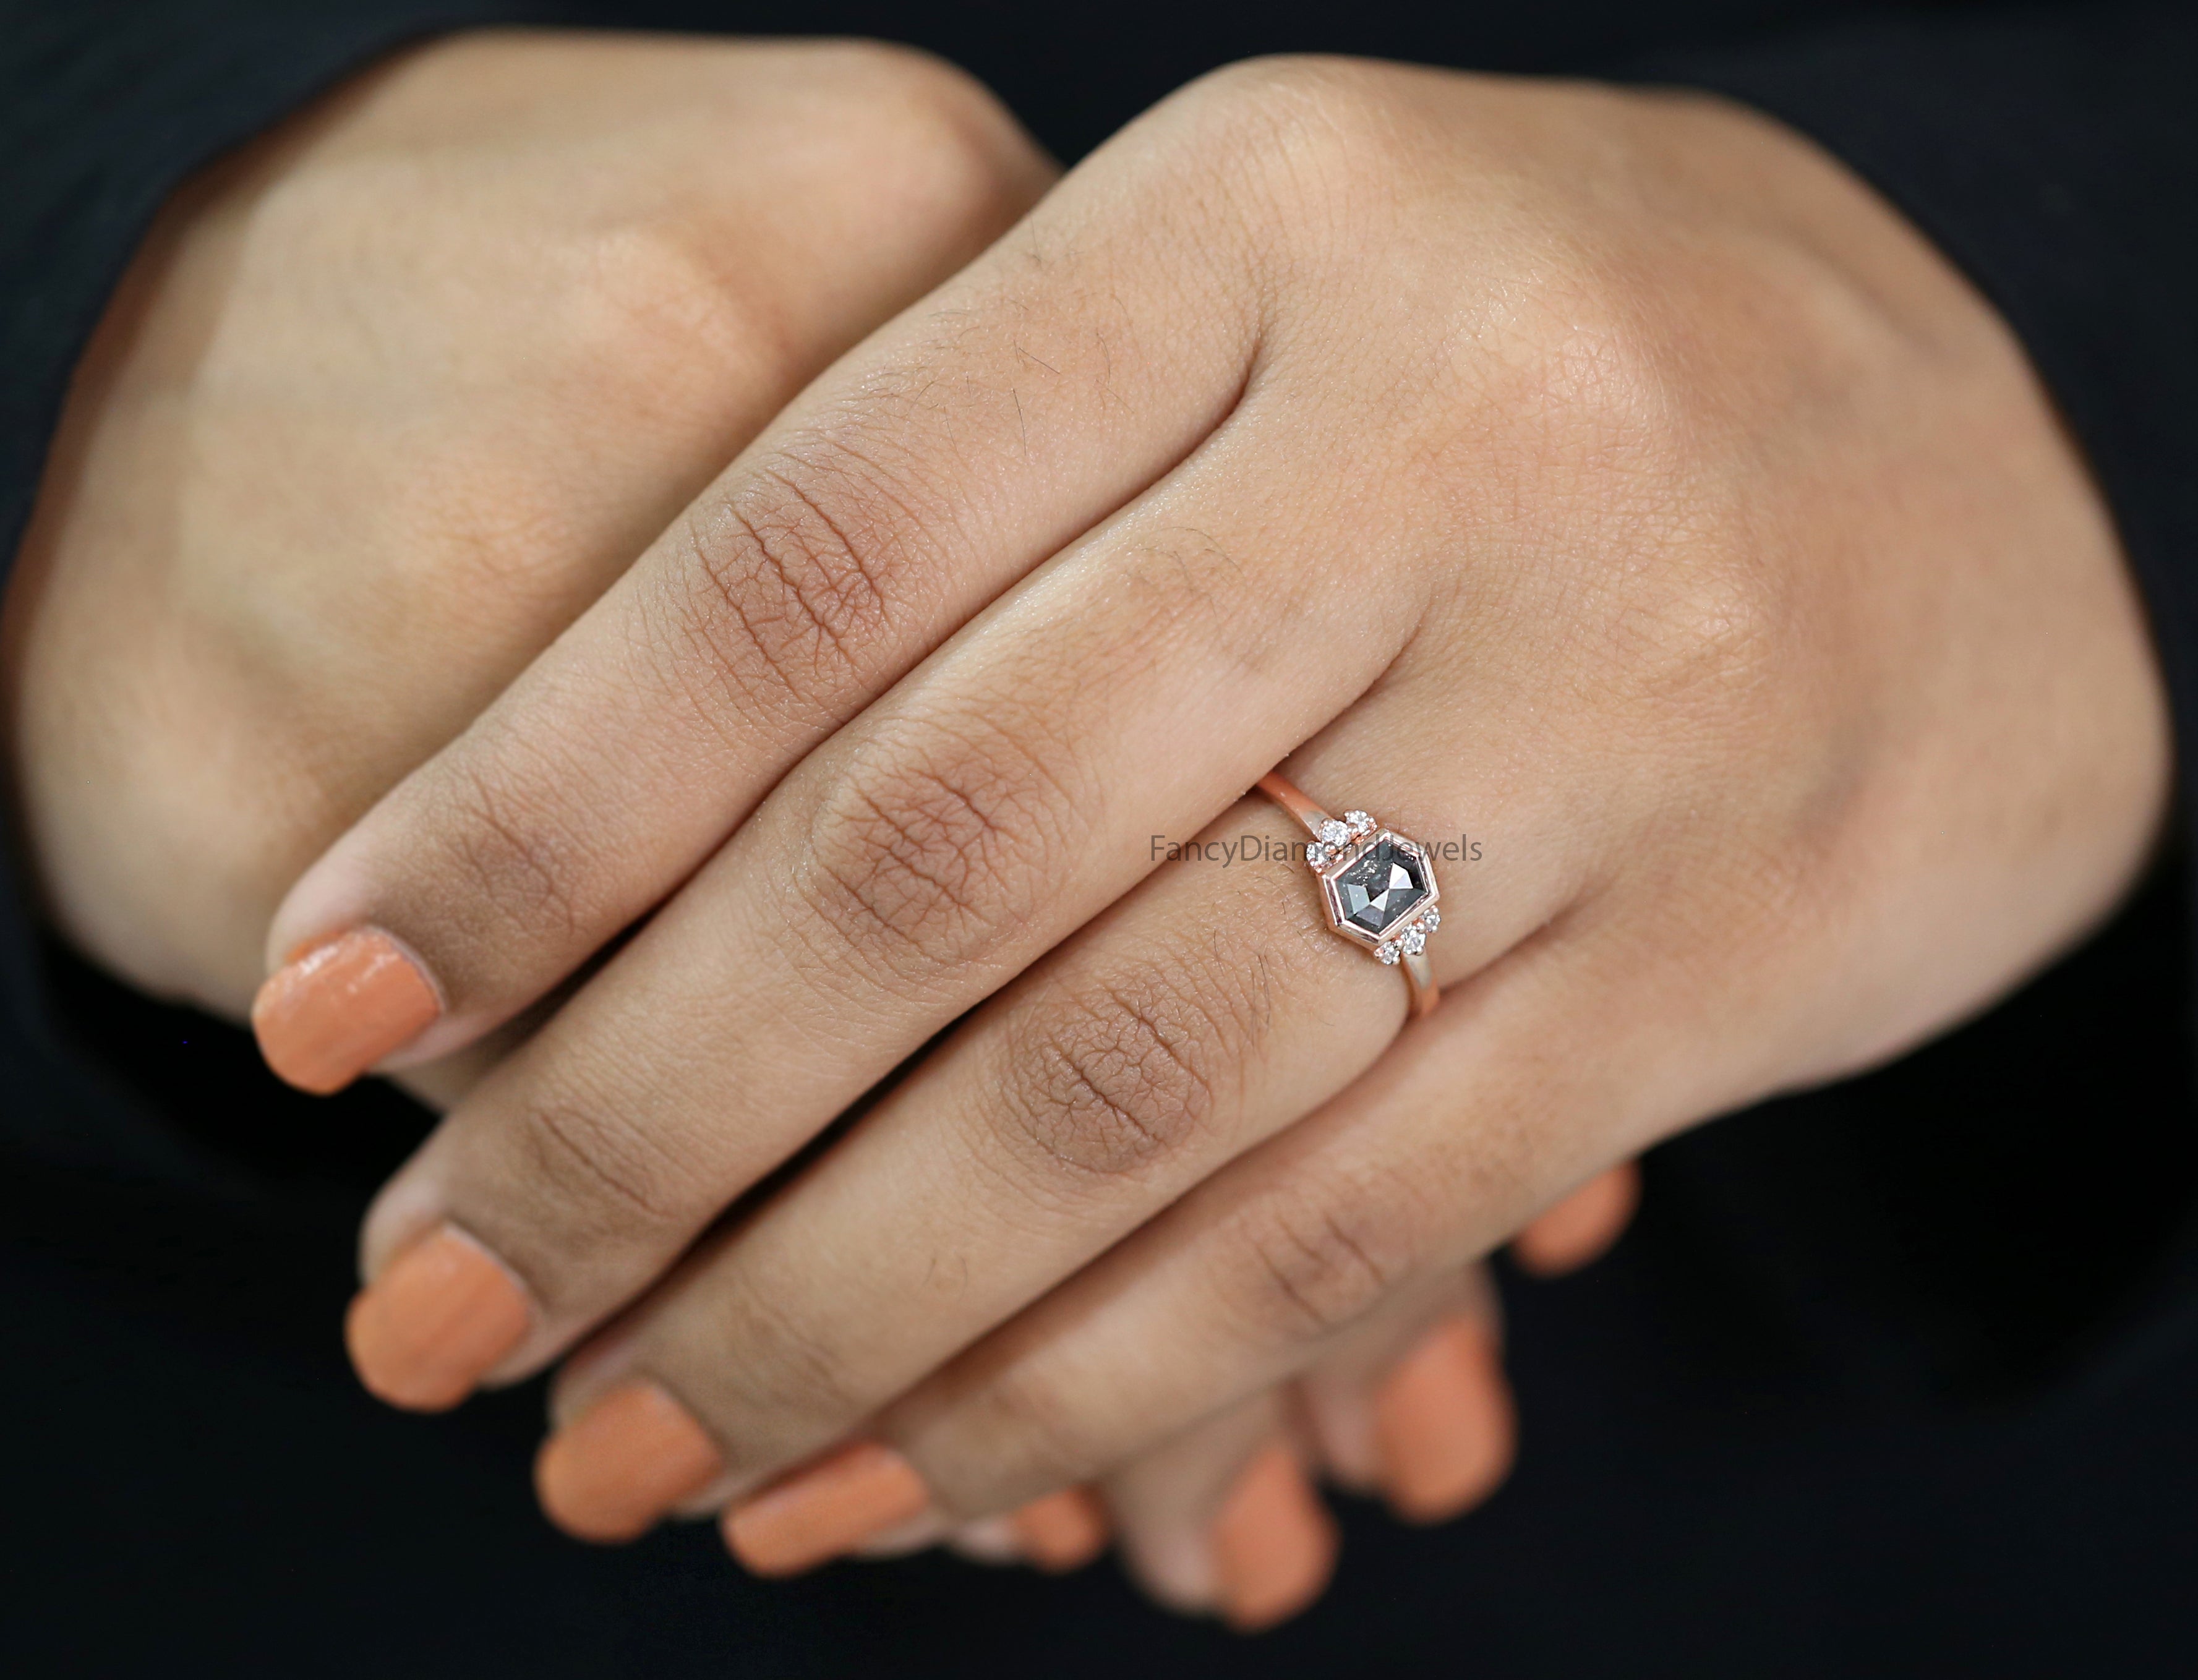 Hexagon Cut Salt And Pepper Diamond Ring 0.83 Ct 6.50 MM Hexagon Cut Diamond Ring 14K Rose Gold Silver Engagement Ring Gift For Her QL1503